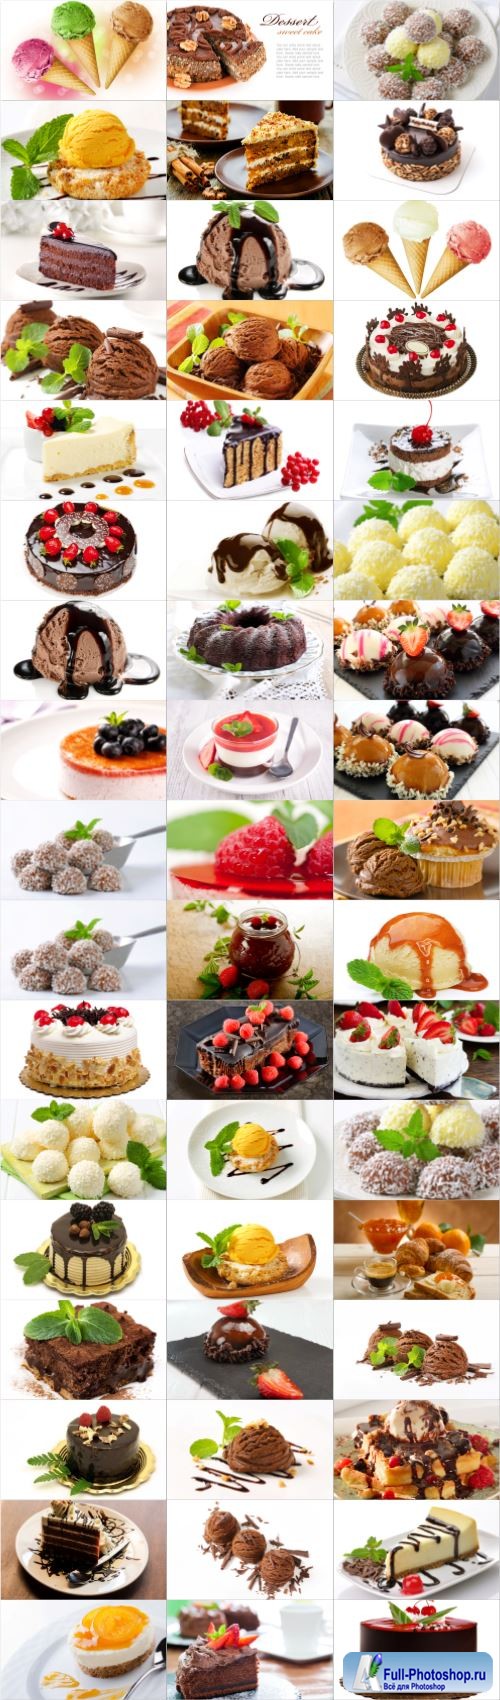 Desserts large selection stock photos